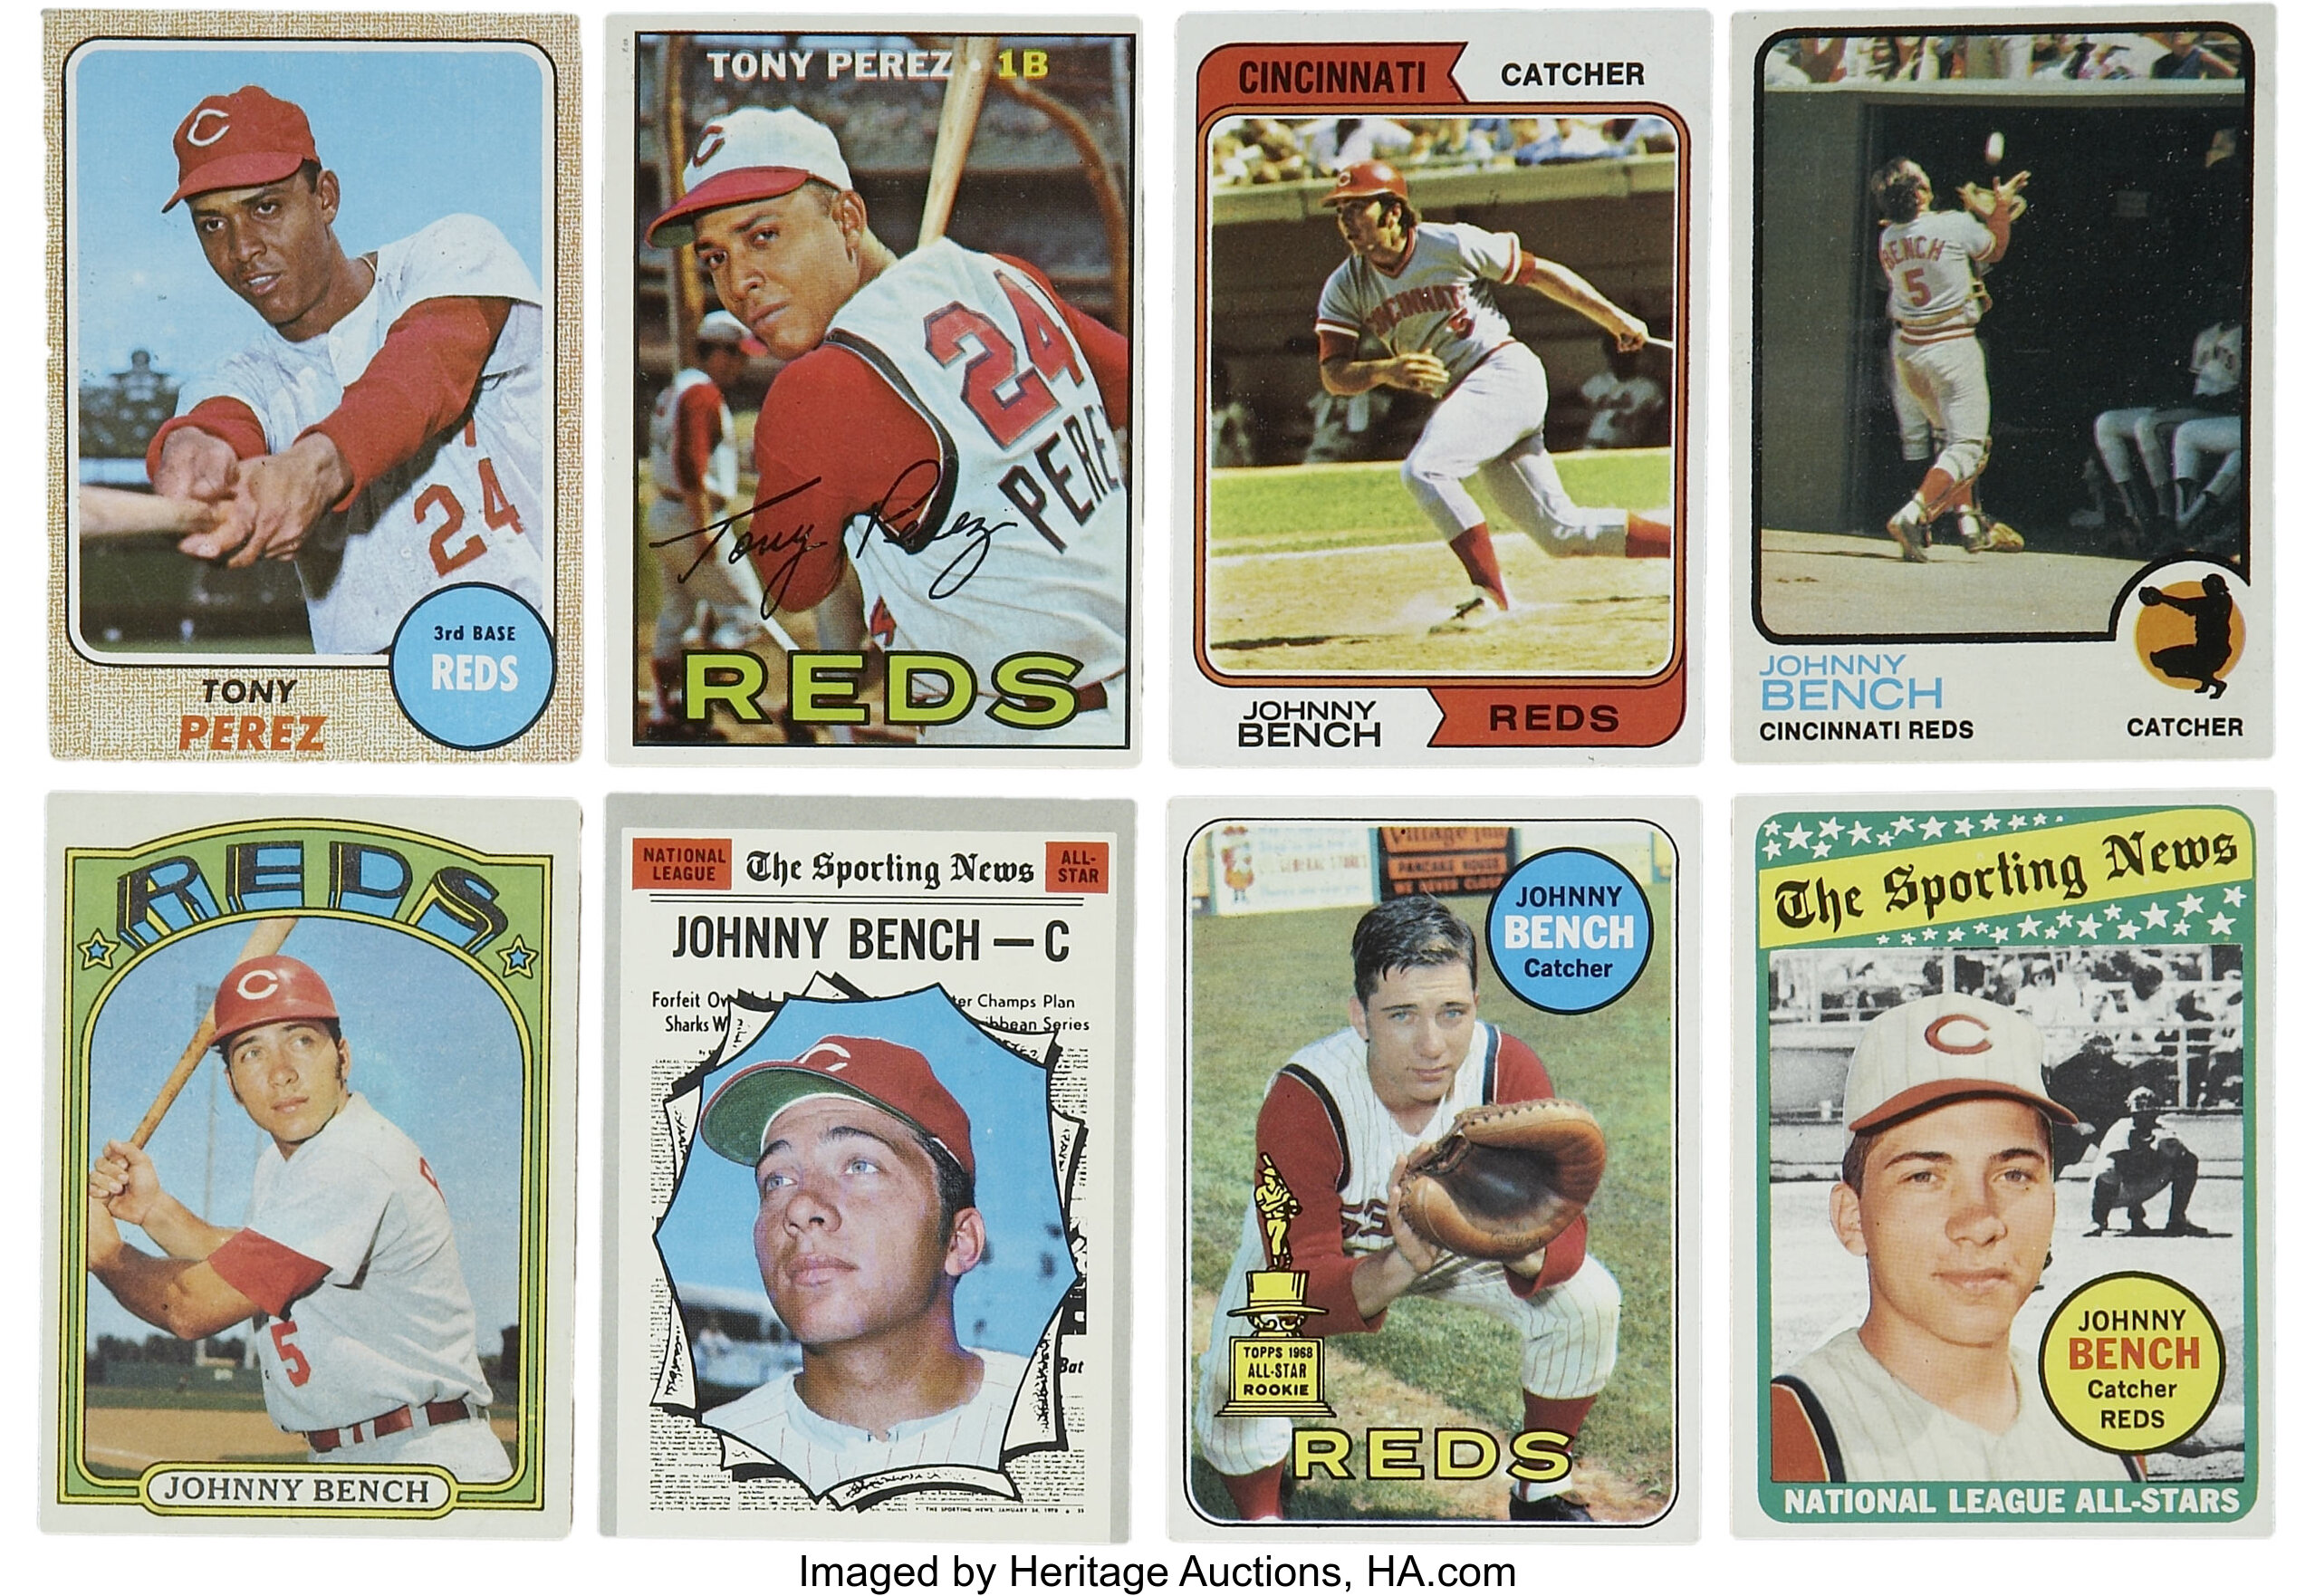 Sold at Auction: Three 1975 Topps Baseball Stars/hof